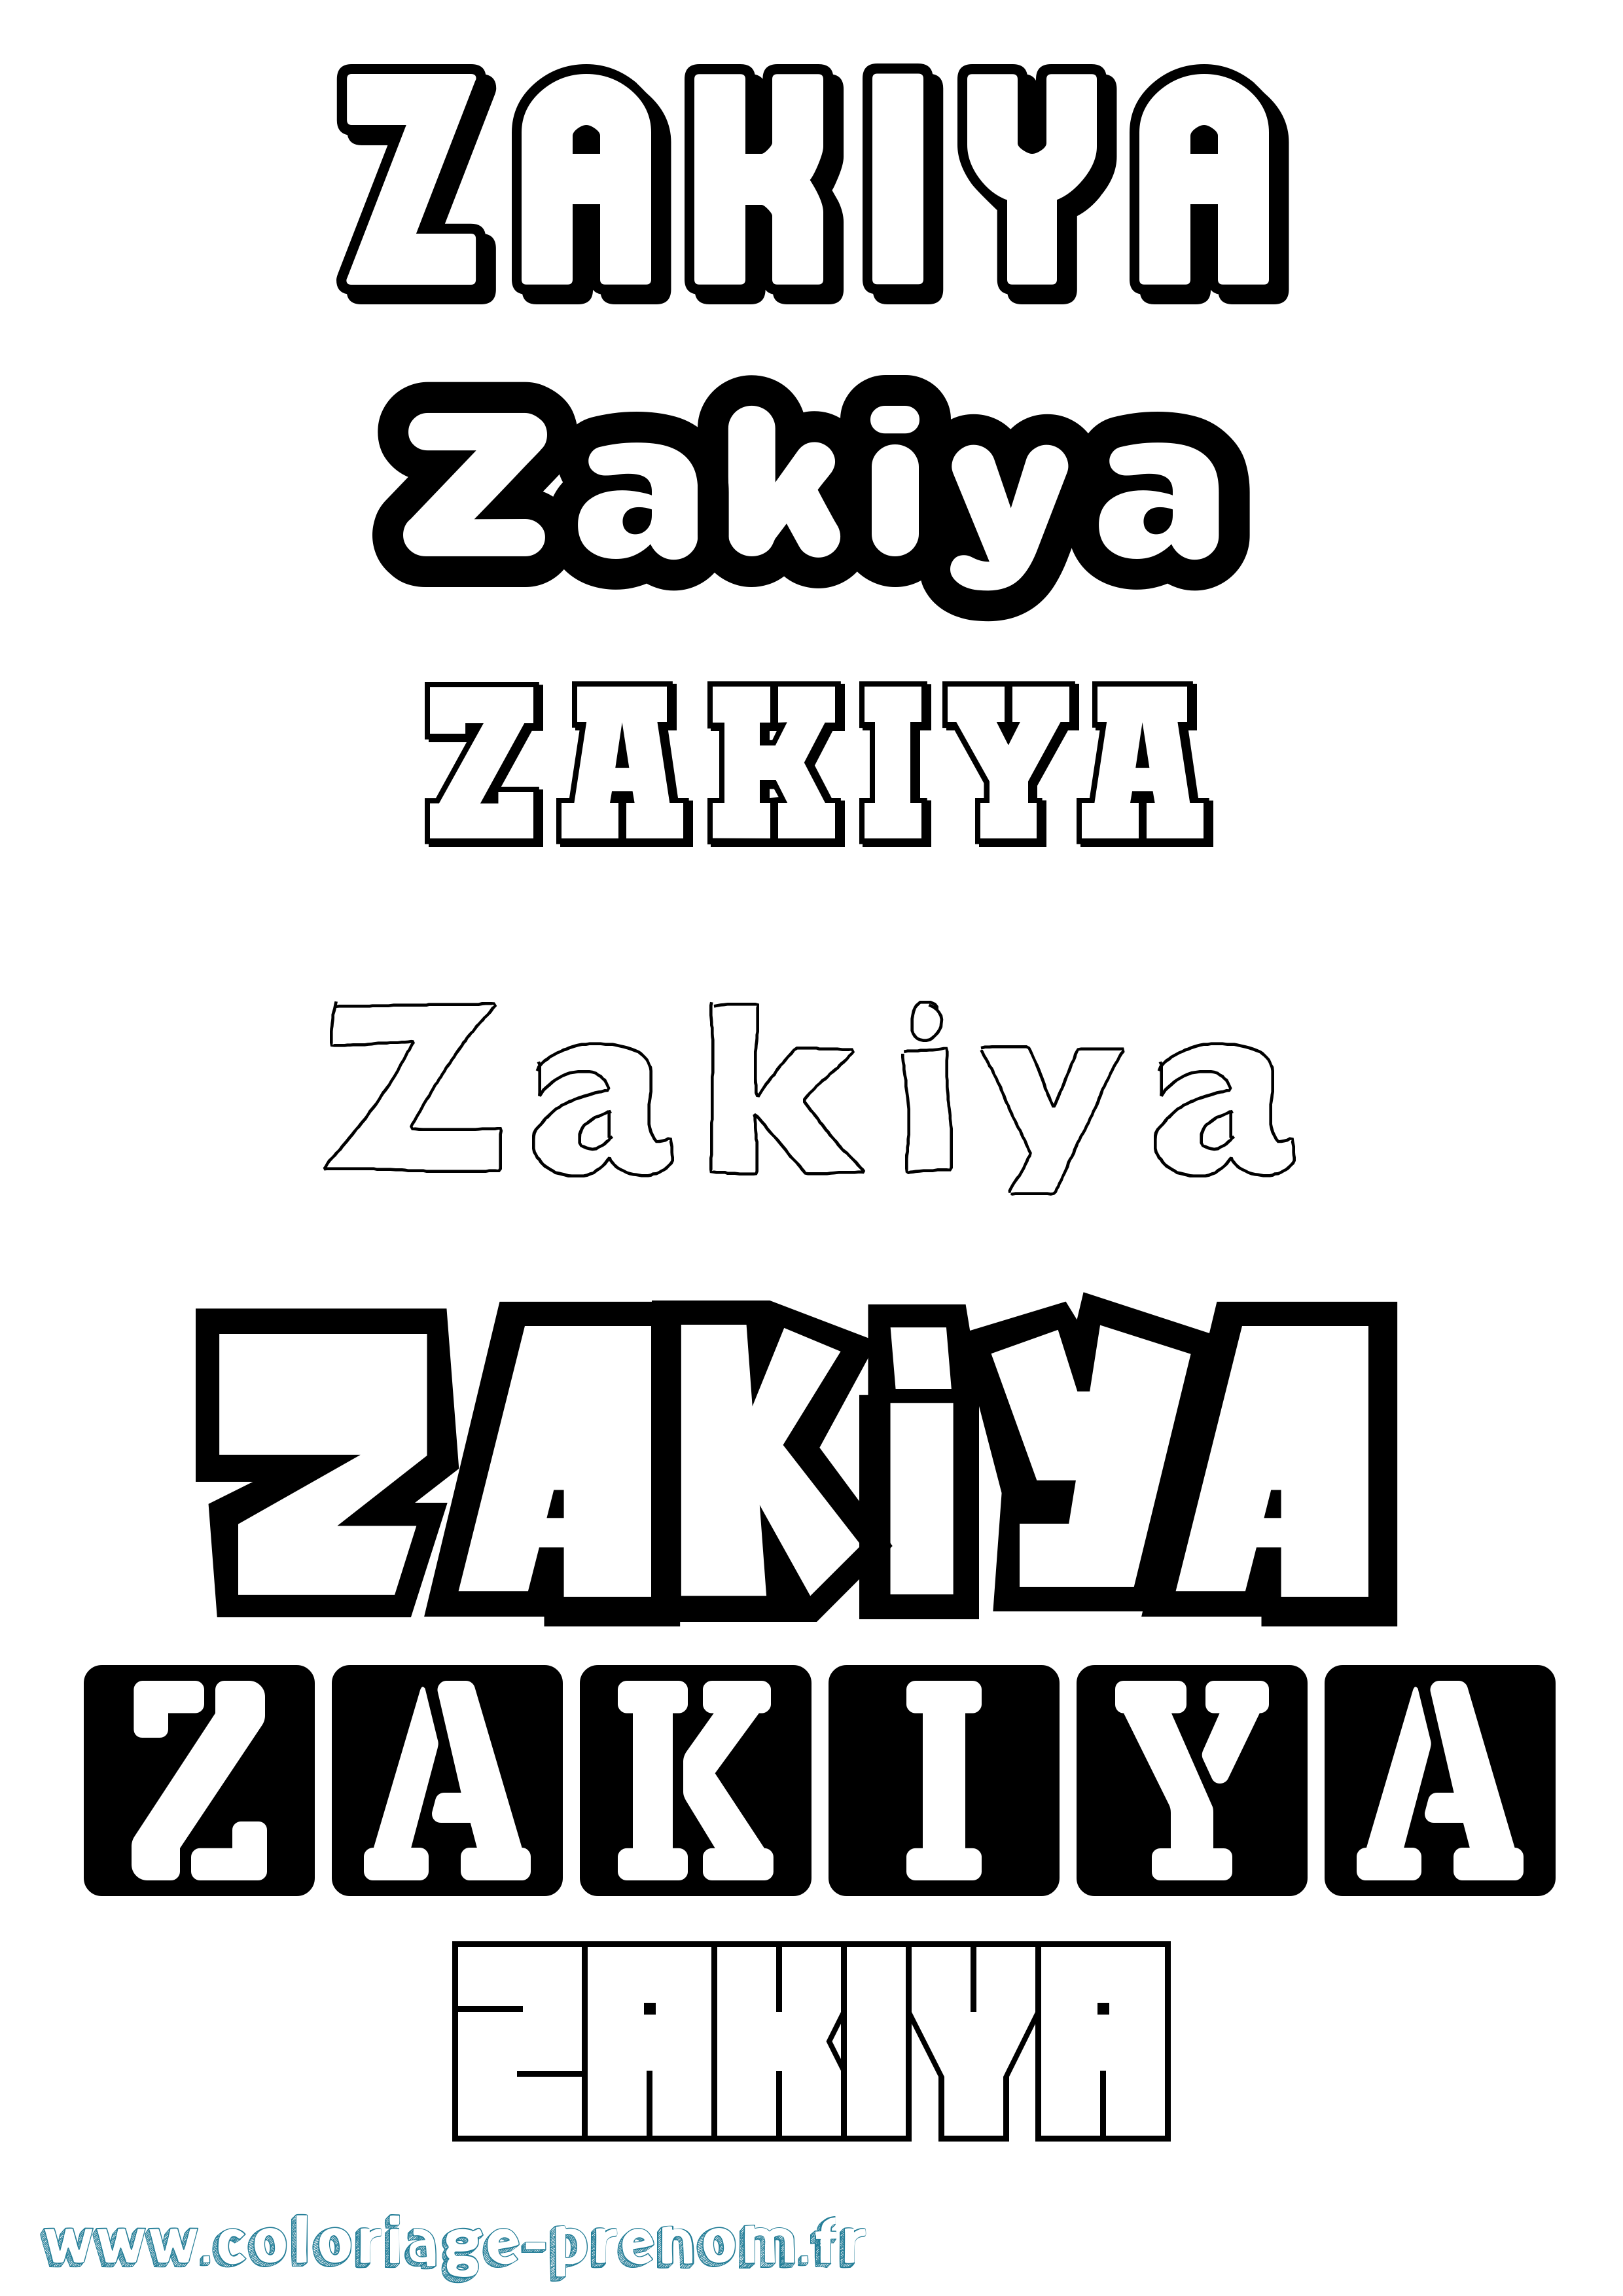 Coloriage prénom Zakiya Simple